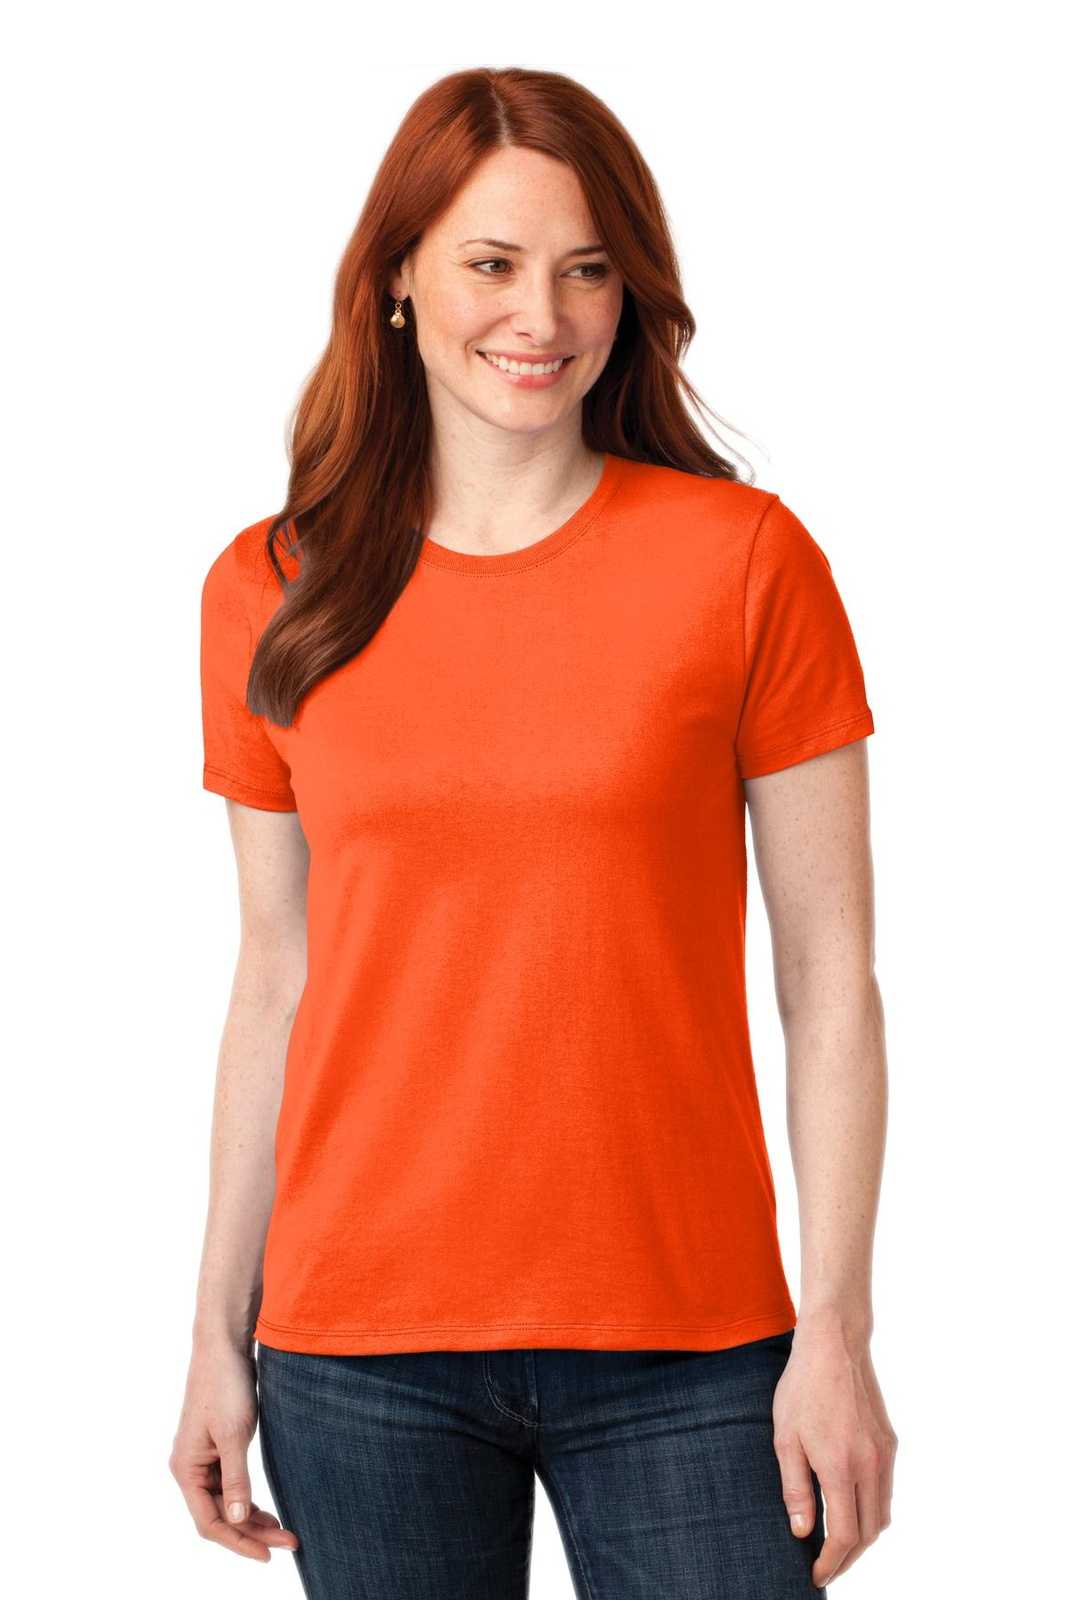 Port & Company LPC55 Ladies Core Blend Tee - Safety Orange - HIT a Double - 1